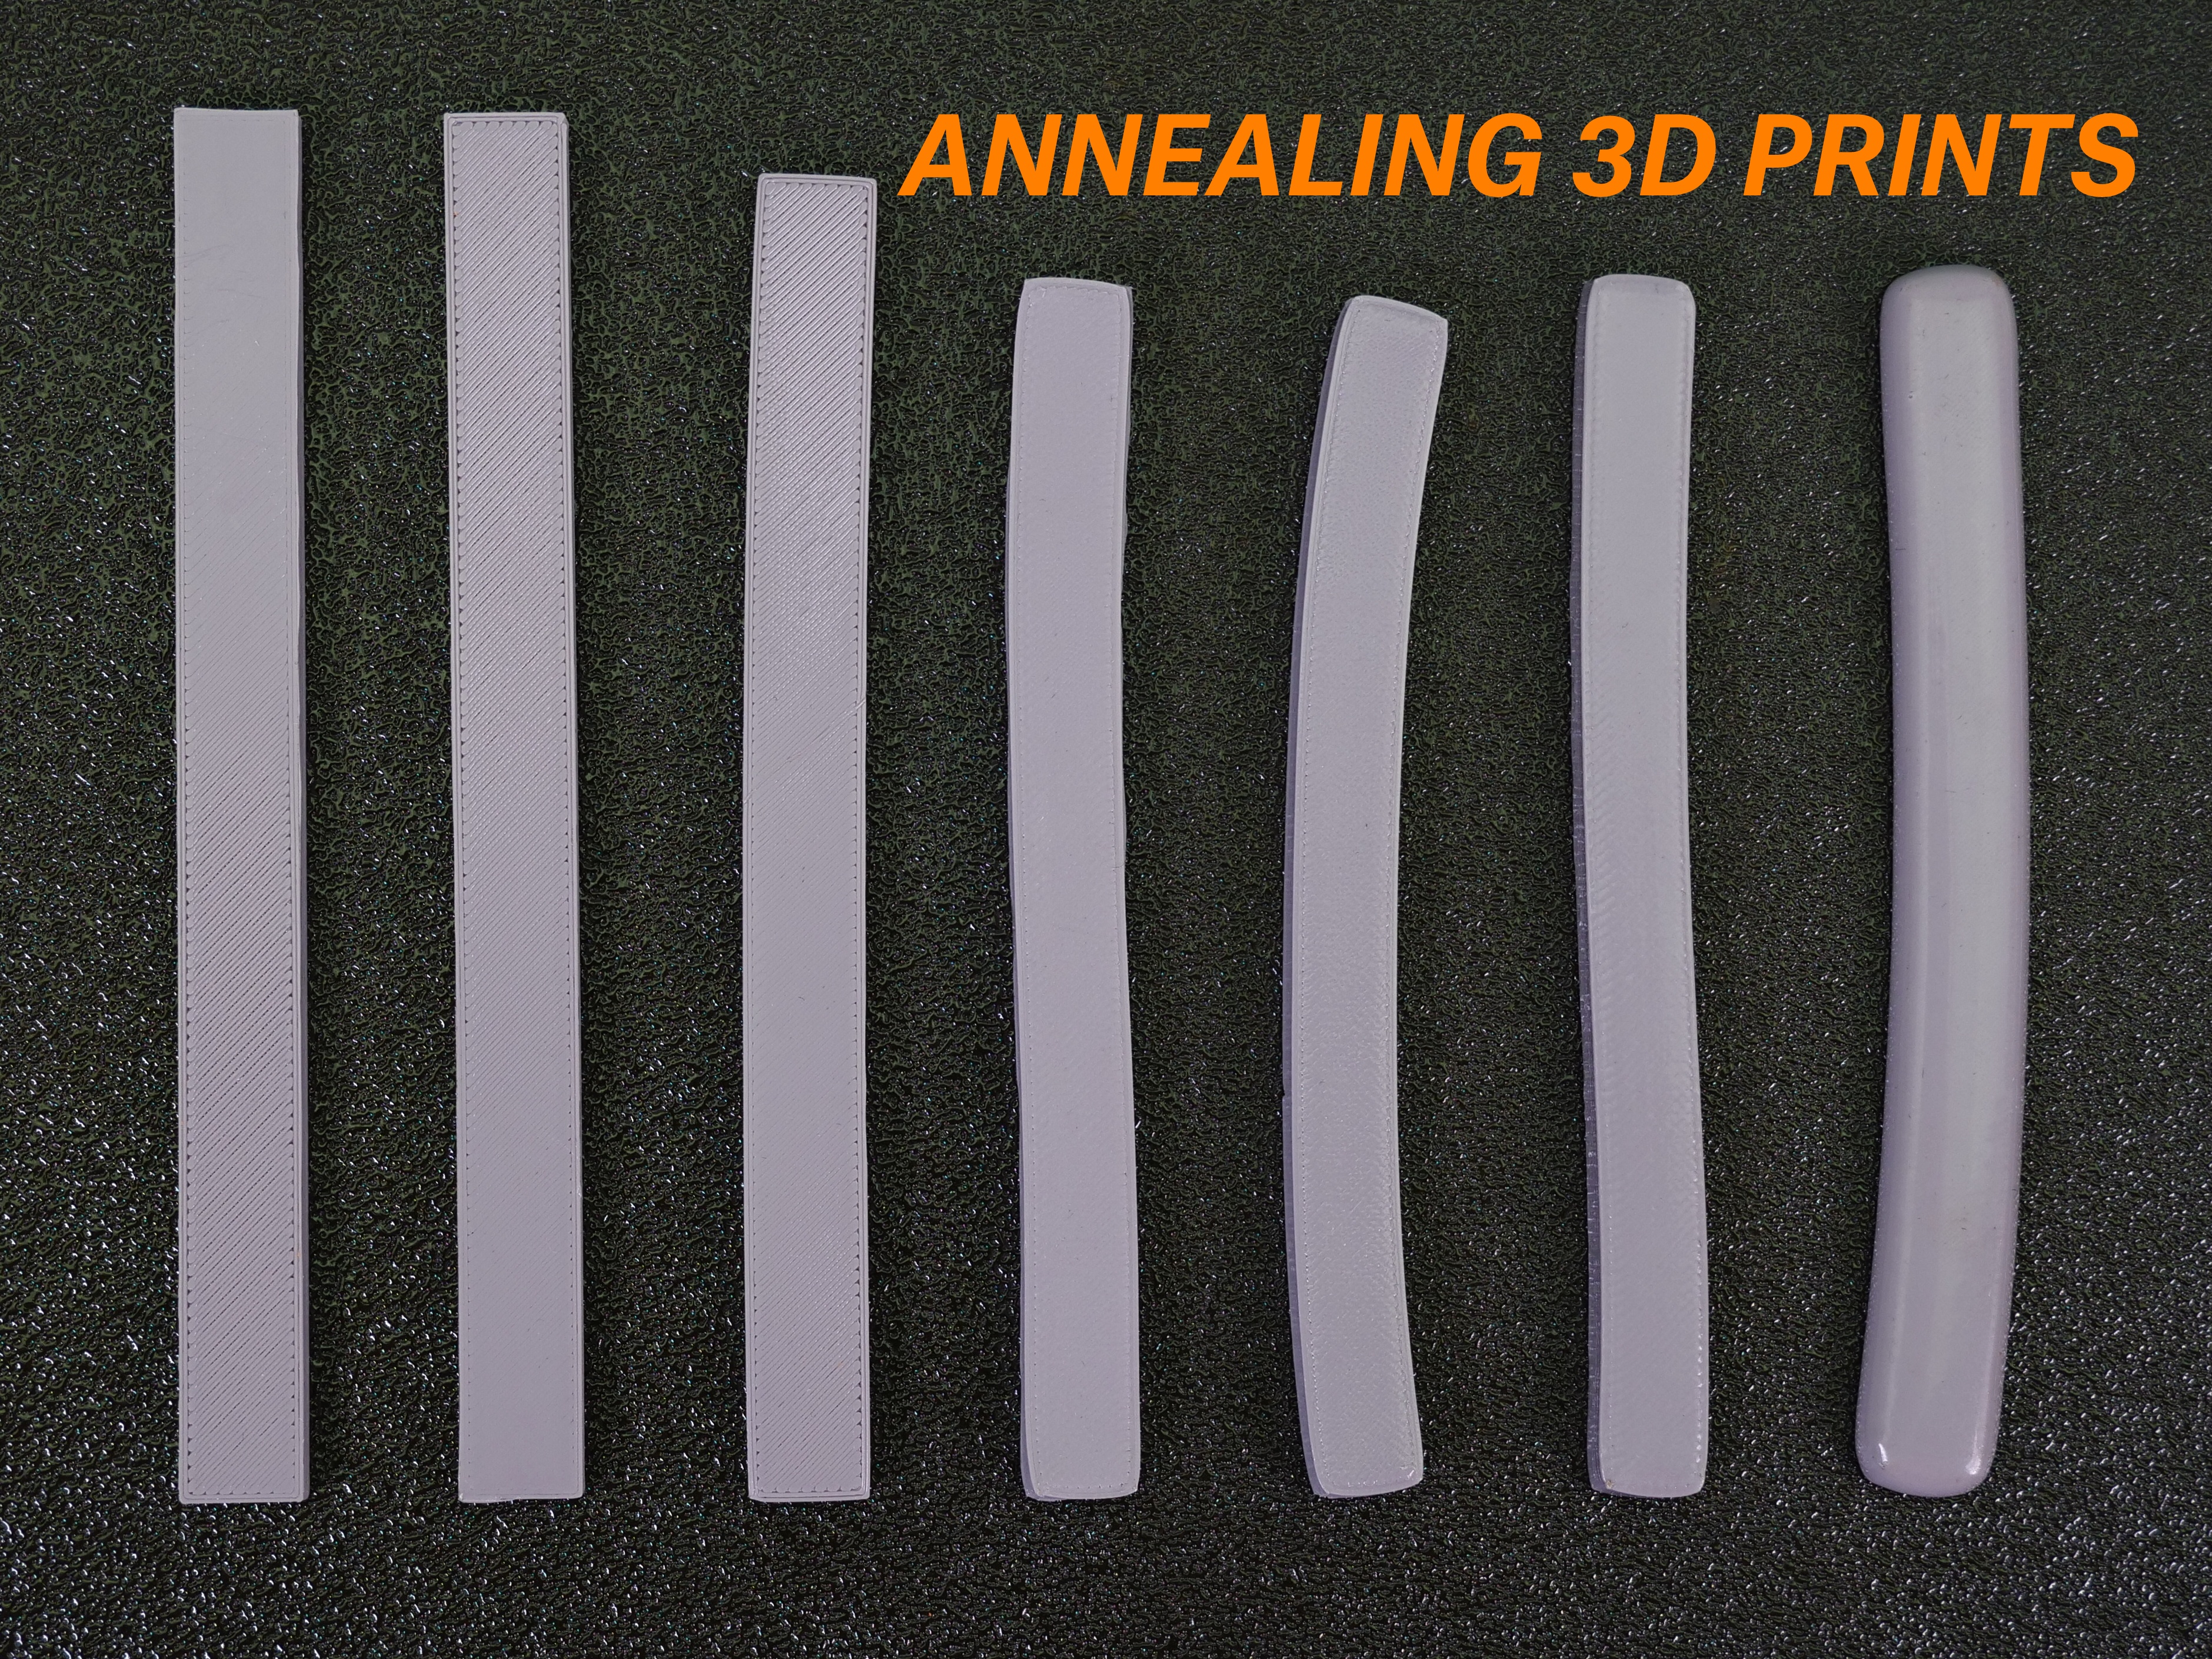 The Top 6 Most Heat-Resistant 3D Printing Filaments